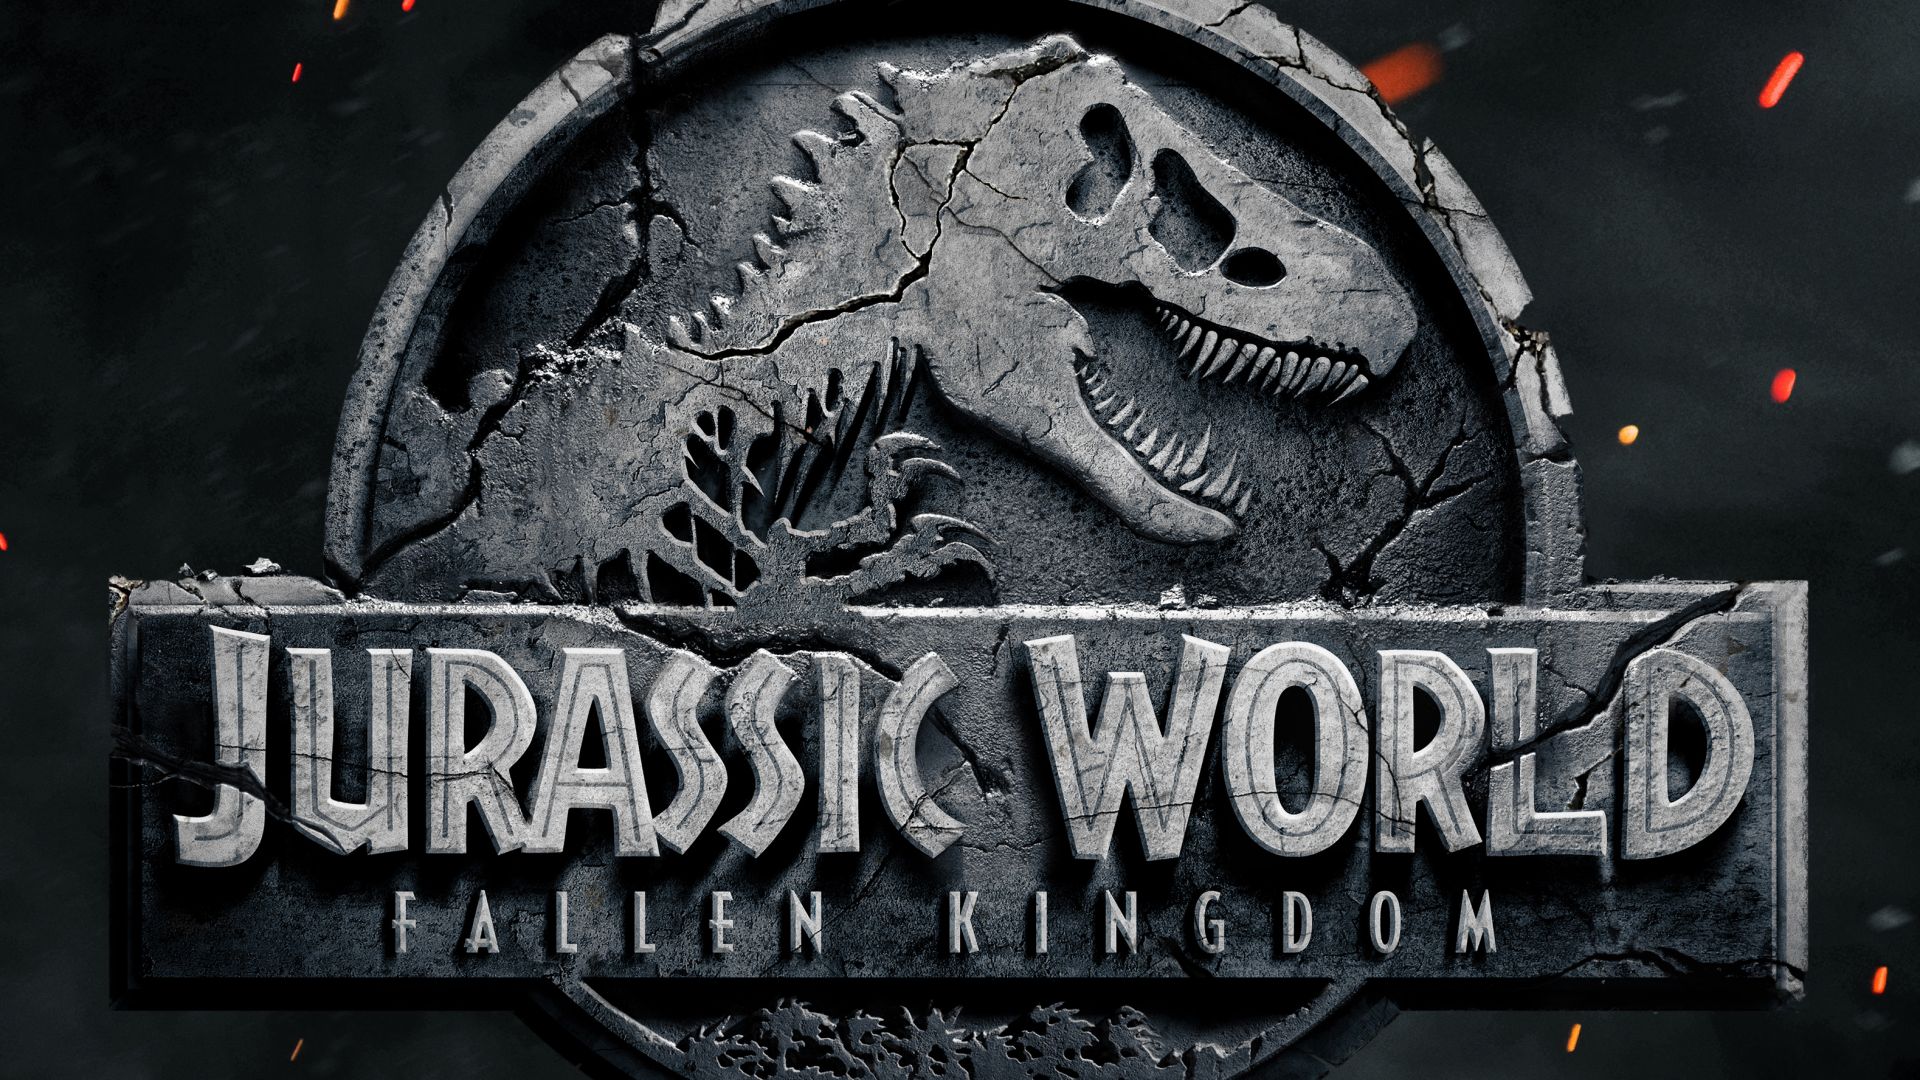 Jurassic World: Fallen Kingdom, poster, 4k (horizontal)